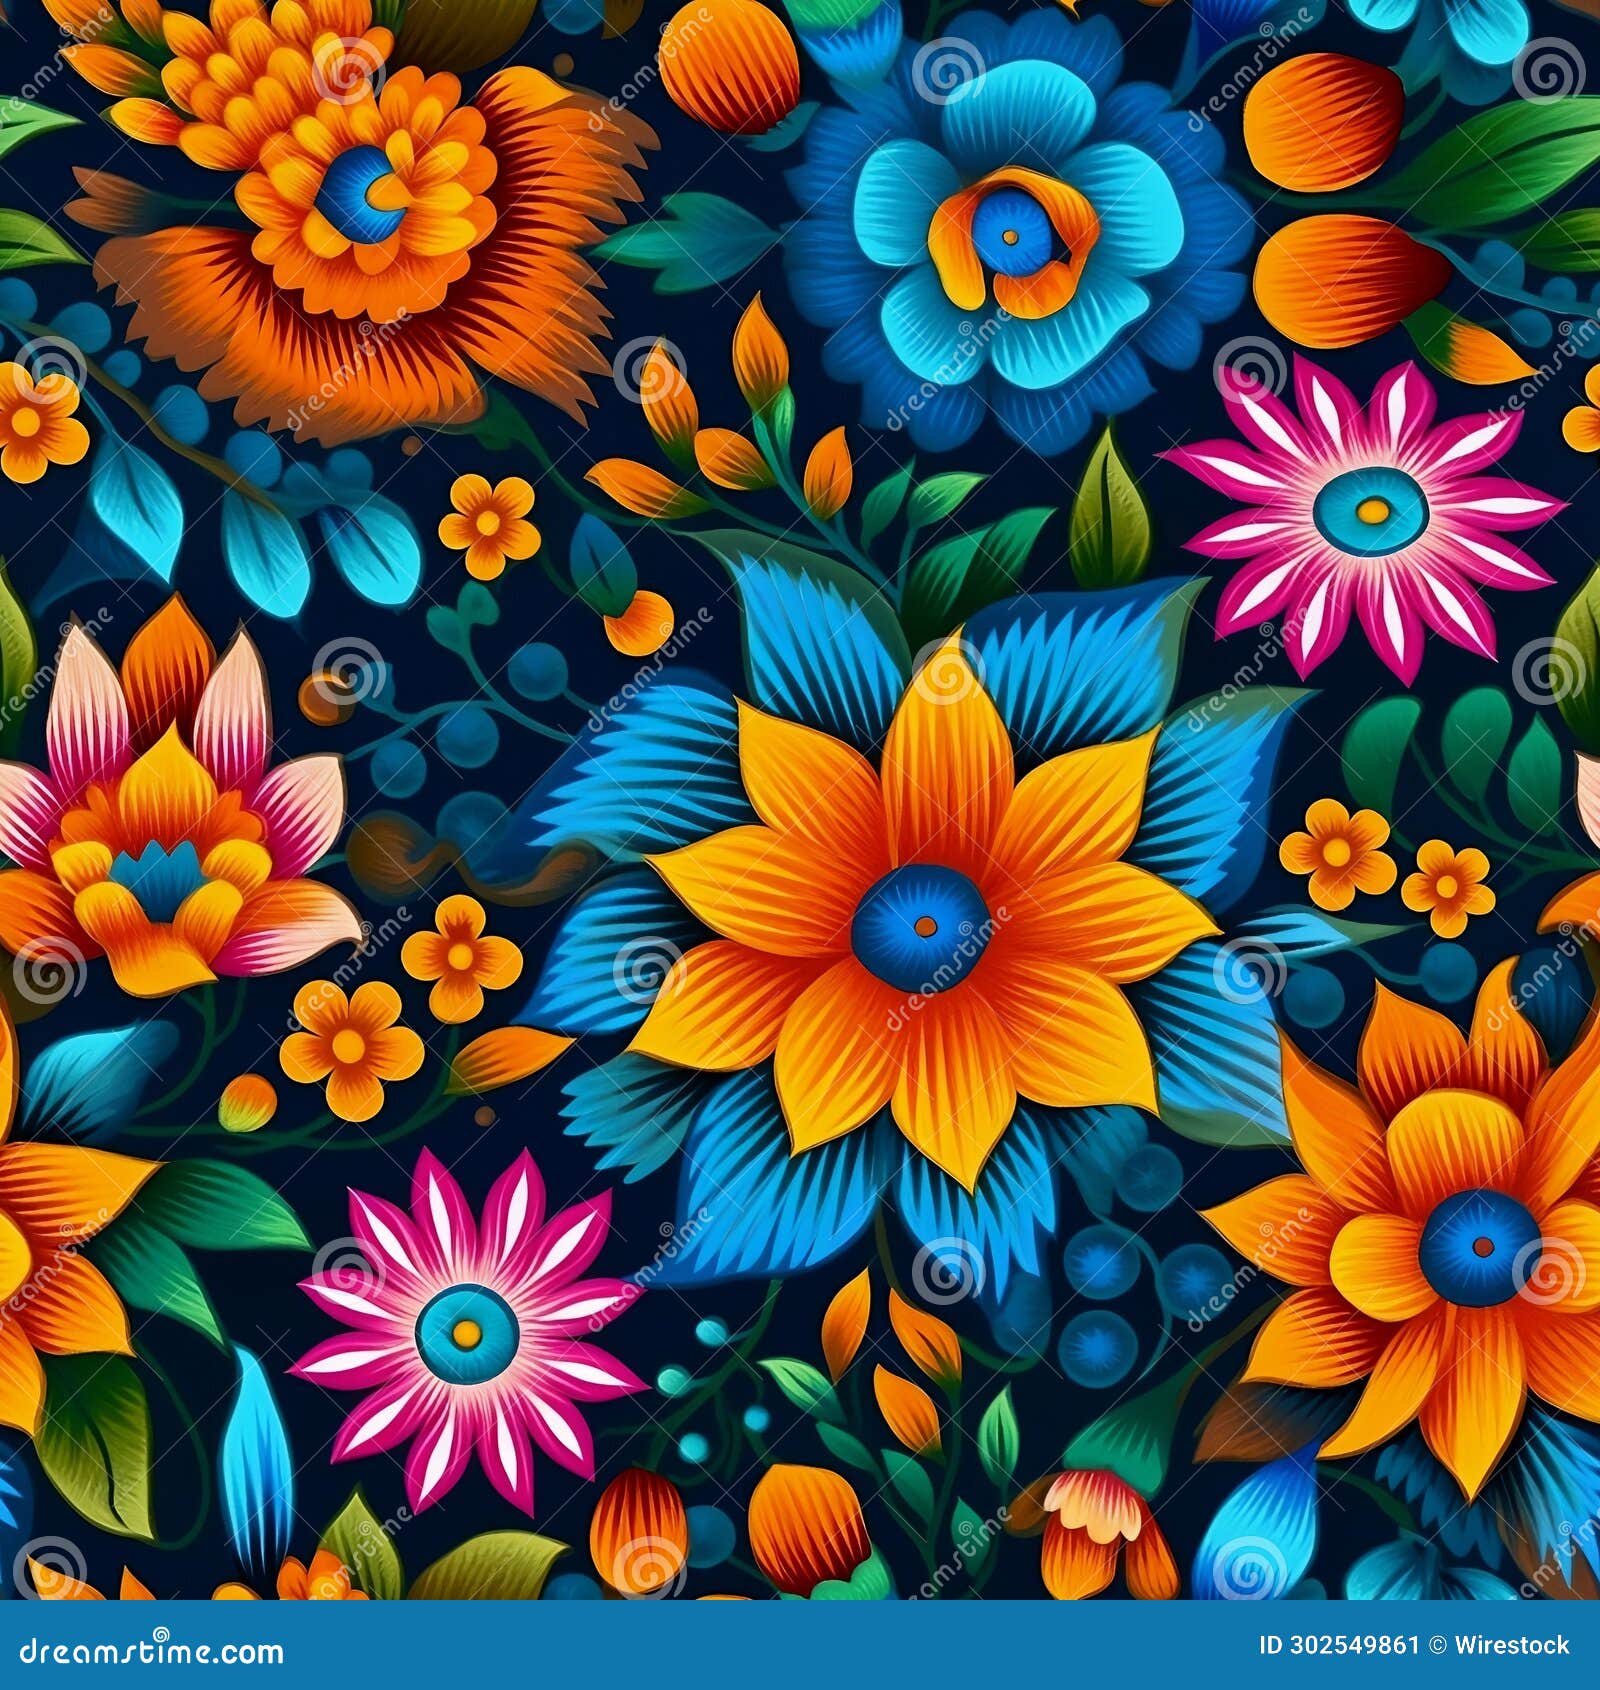 ai generated  of tile pattern bordados de tenancingo colorful flowers